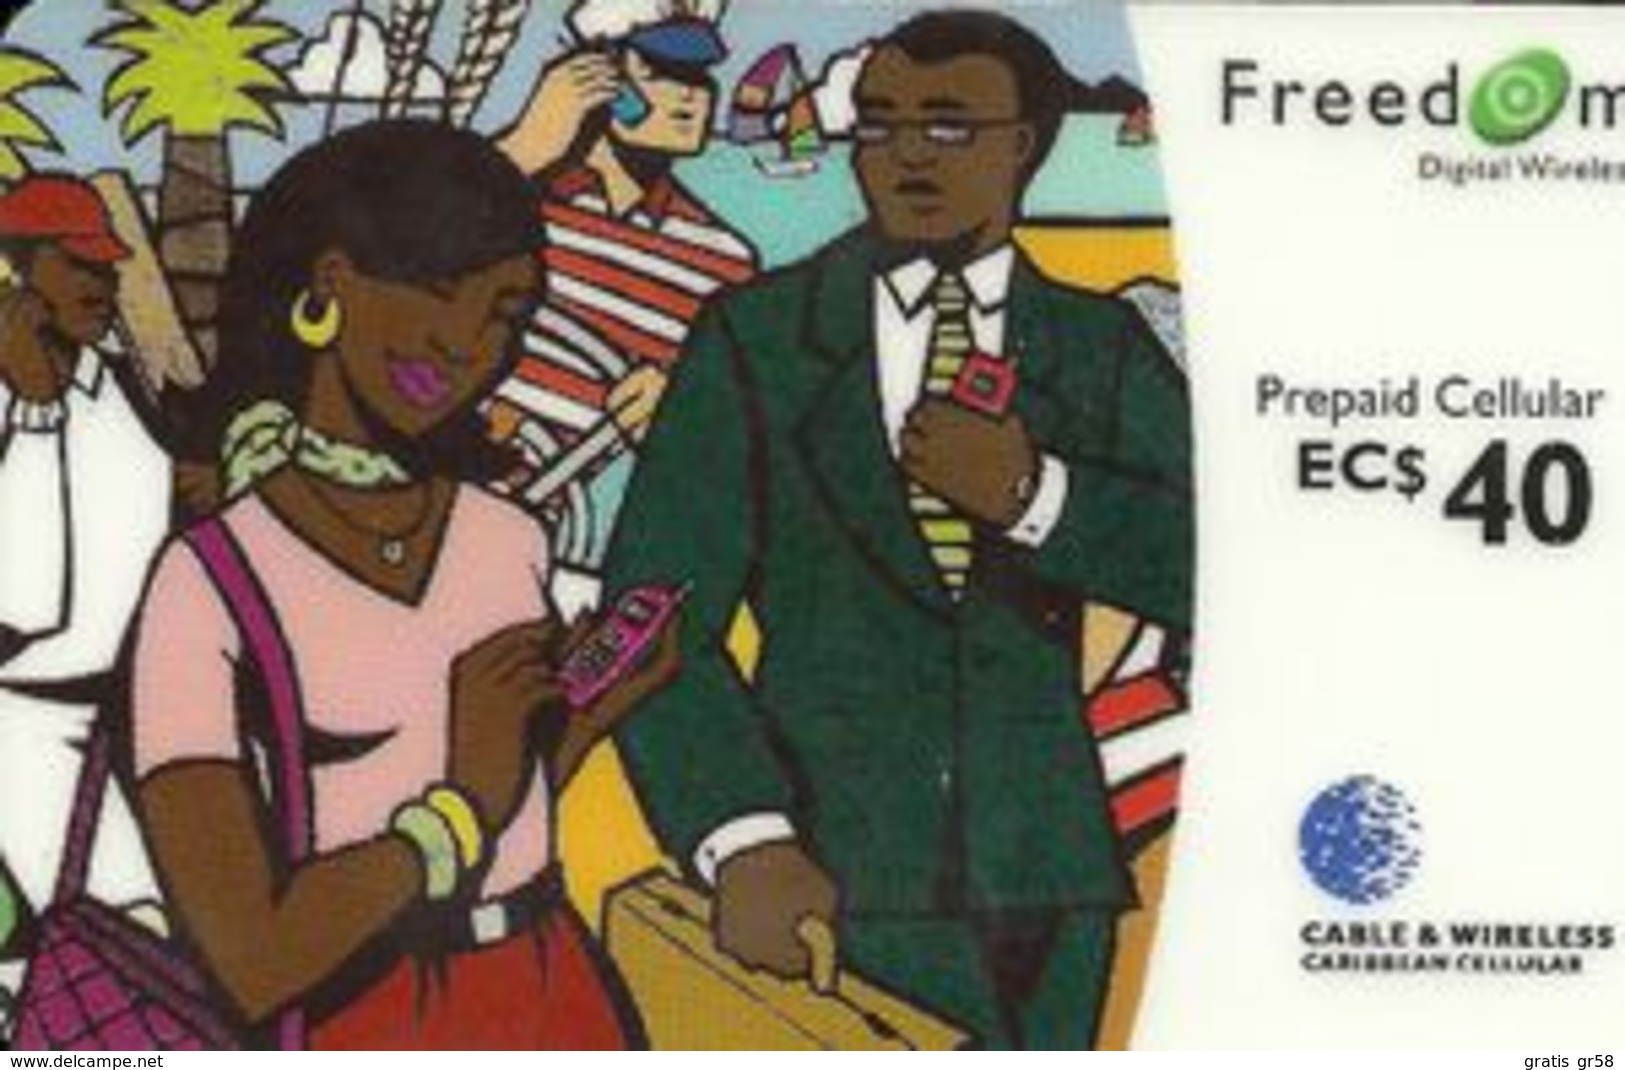 Caribbean Isl. - G&W, Cellular Prepaid, GSM Refill Freedom, 40 EC$, Used - Autres - Amérique